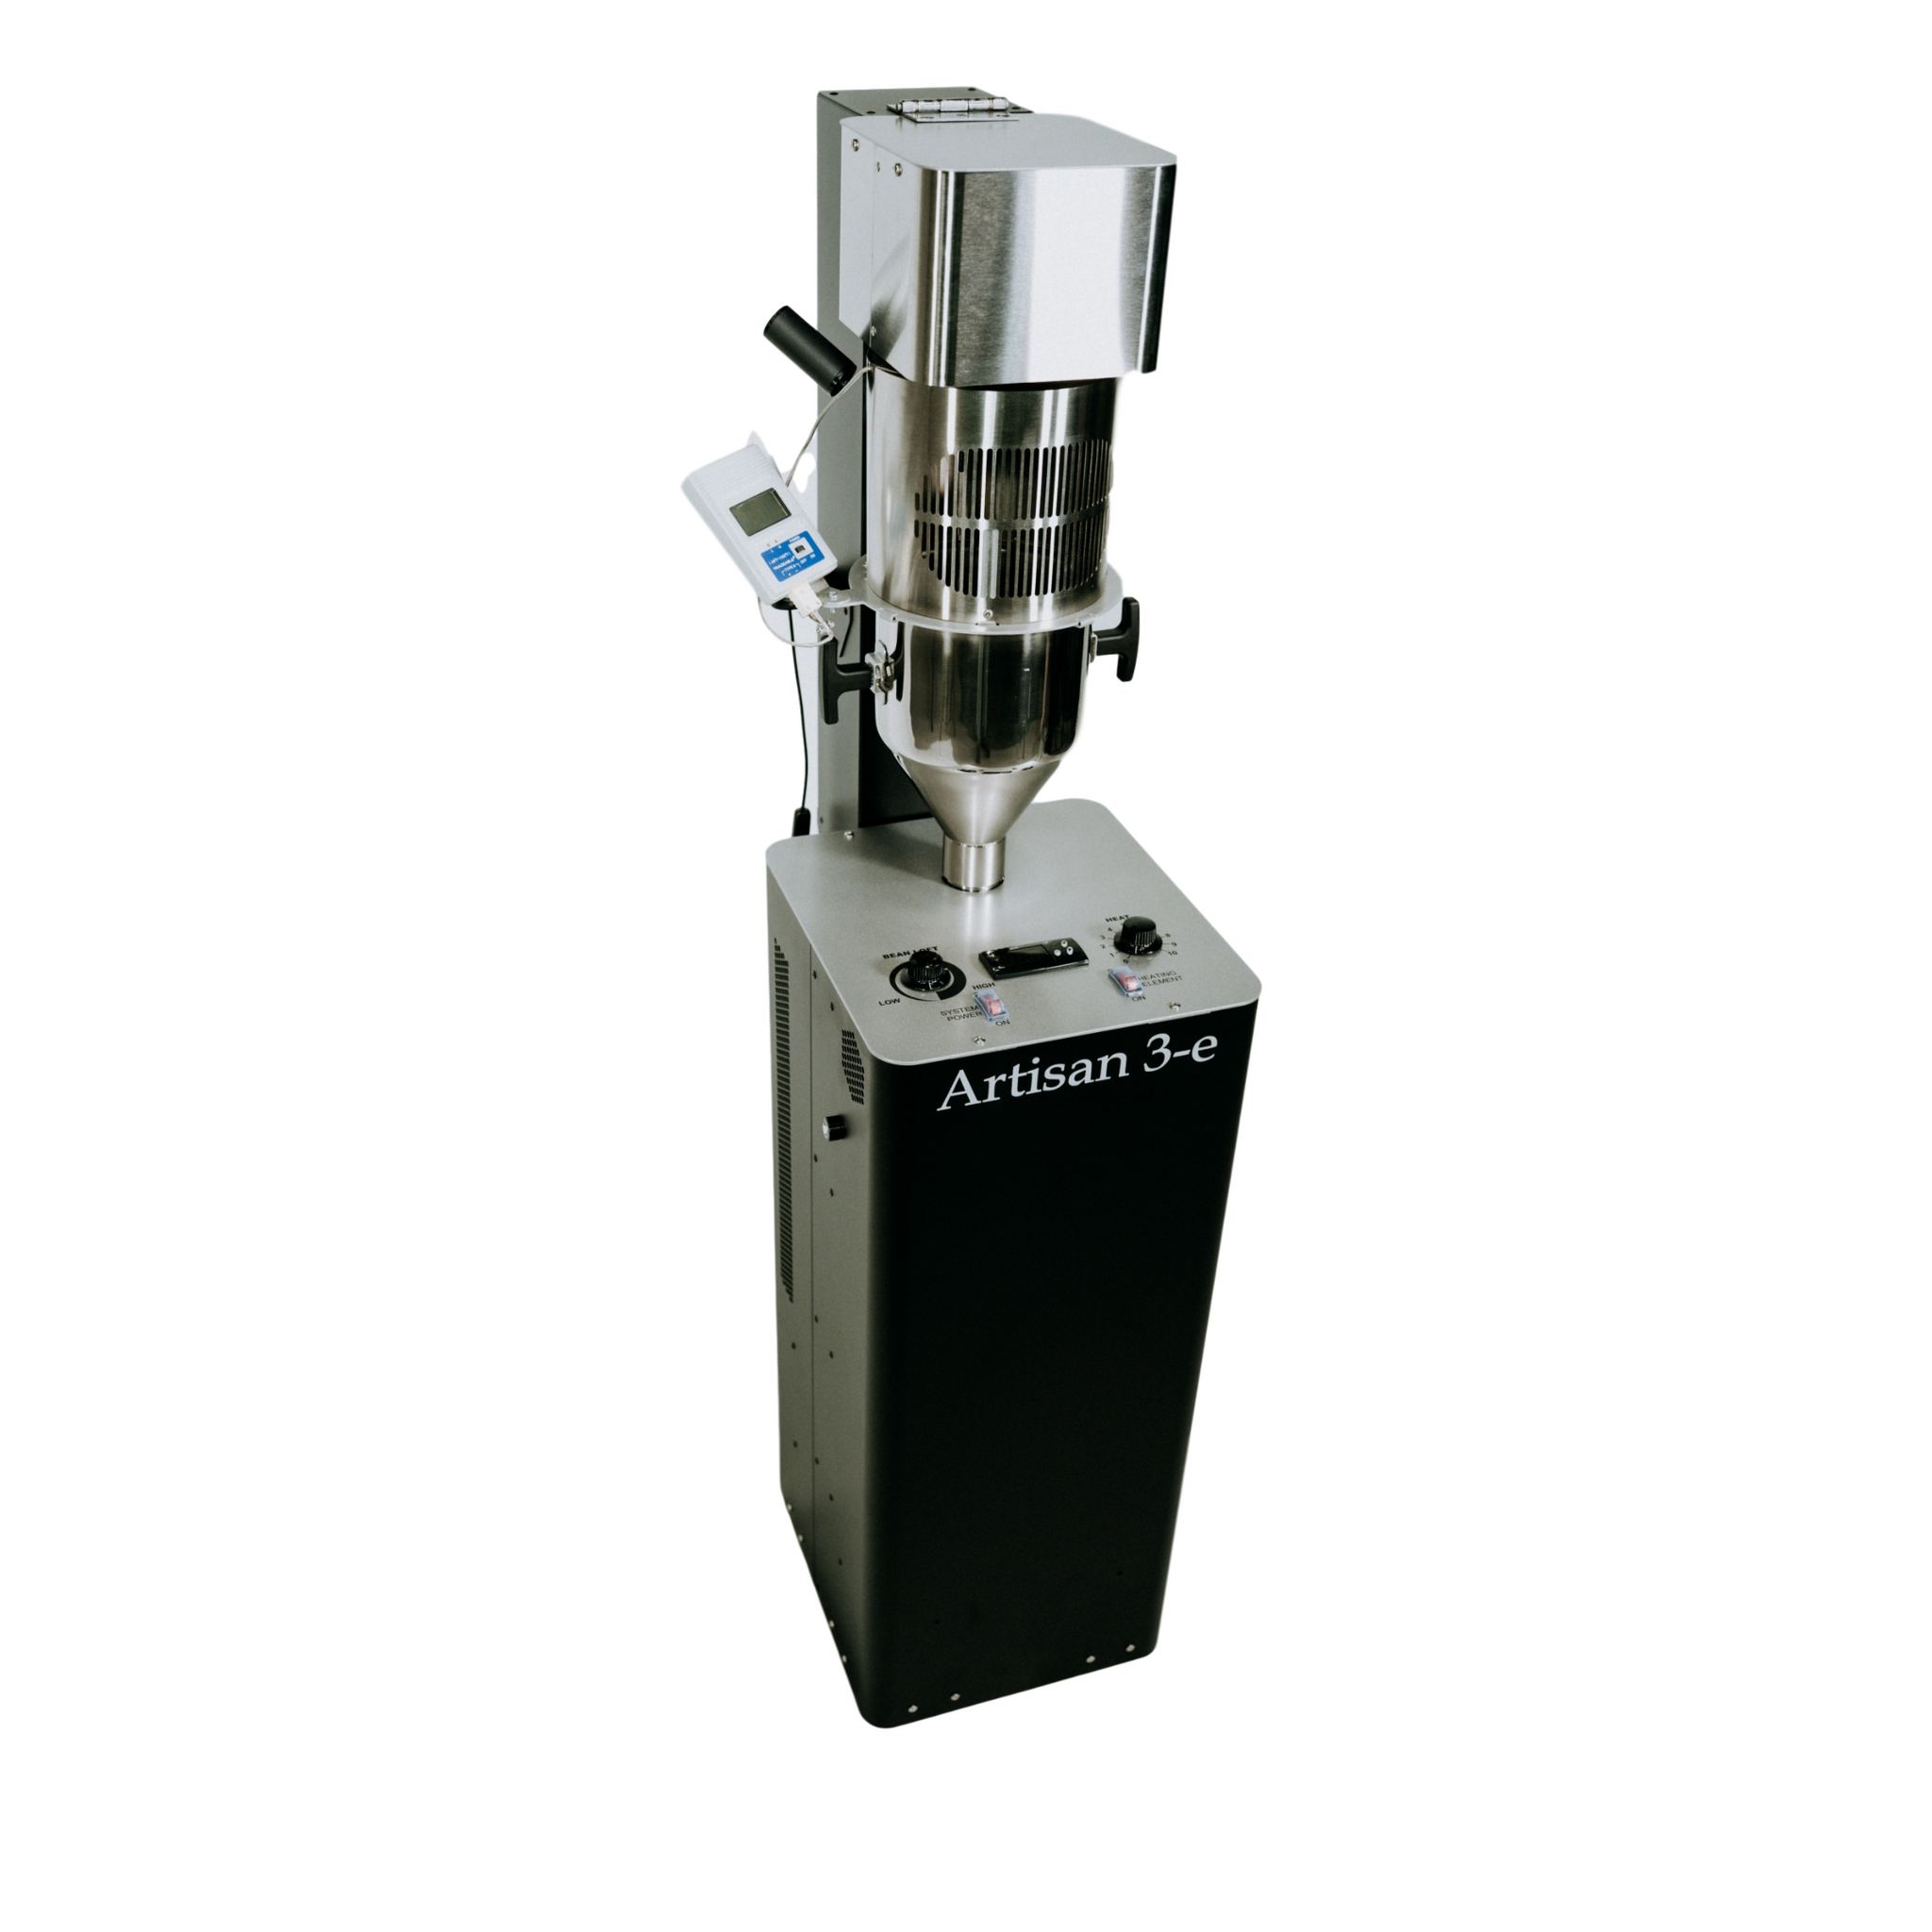 45-degree view of the Artisan 3-e coffee roaster